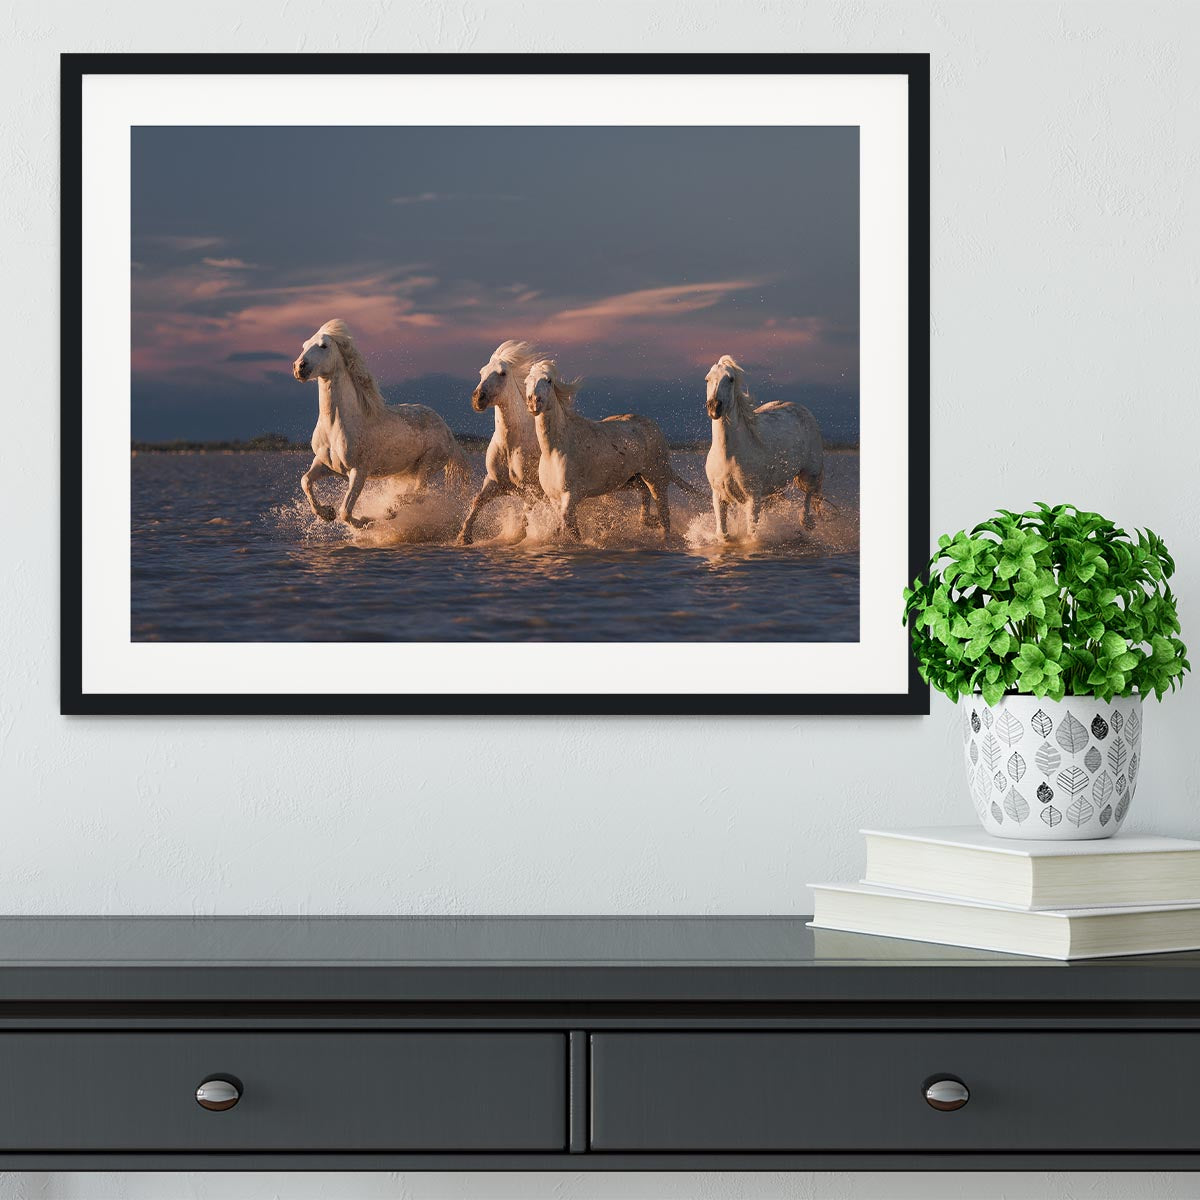 Wite Horses Running In Water 2 Framed Print - Canvas Art Rocks - 1